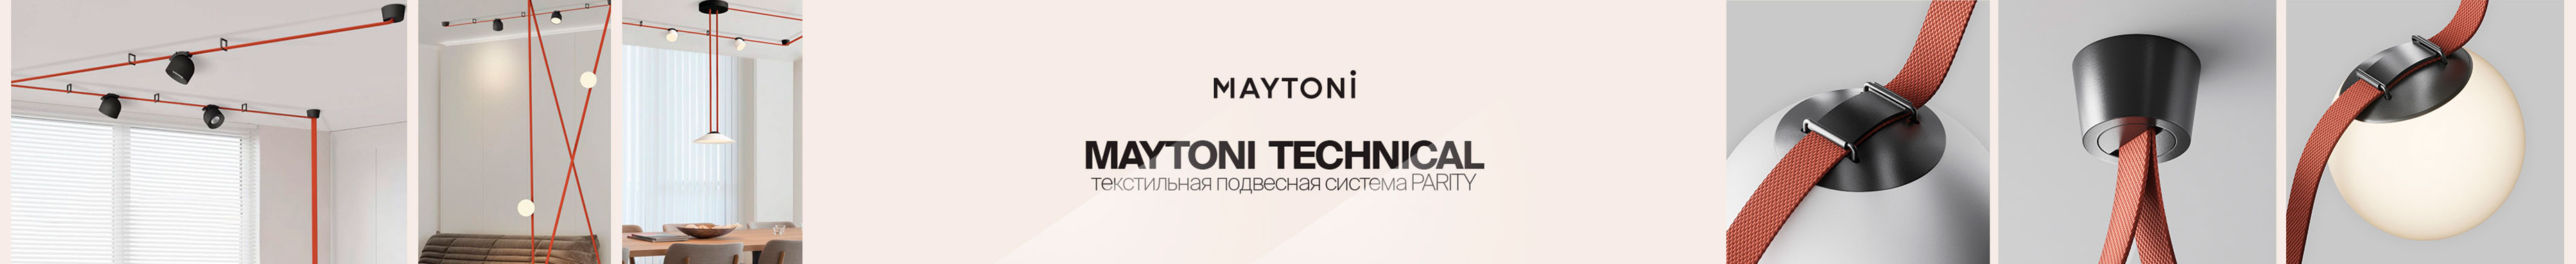 Продукция maytoni оптом в Минске